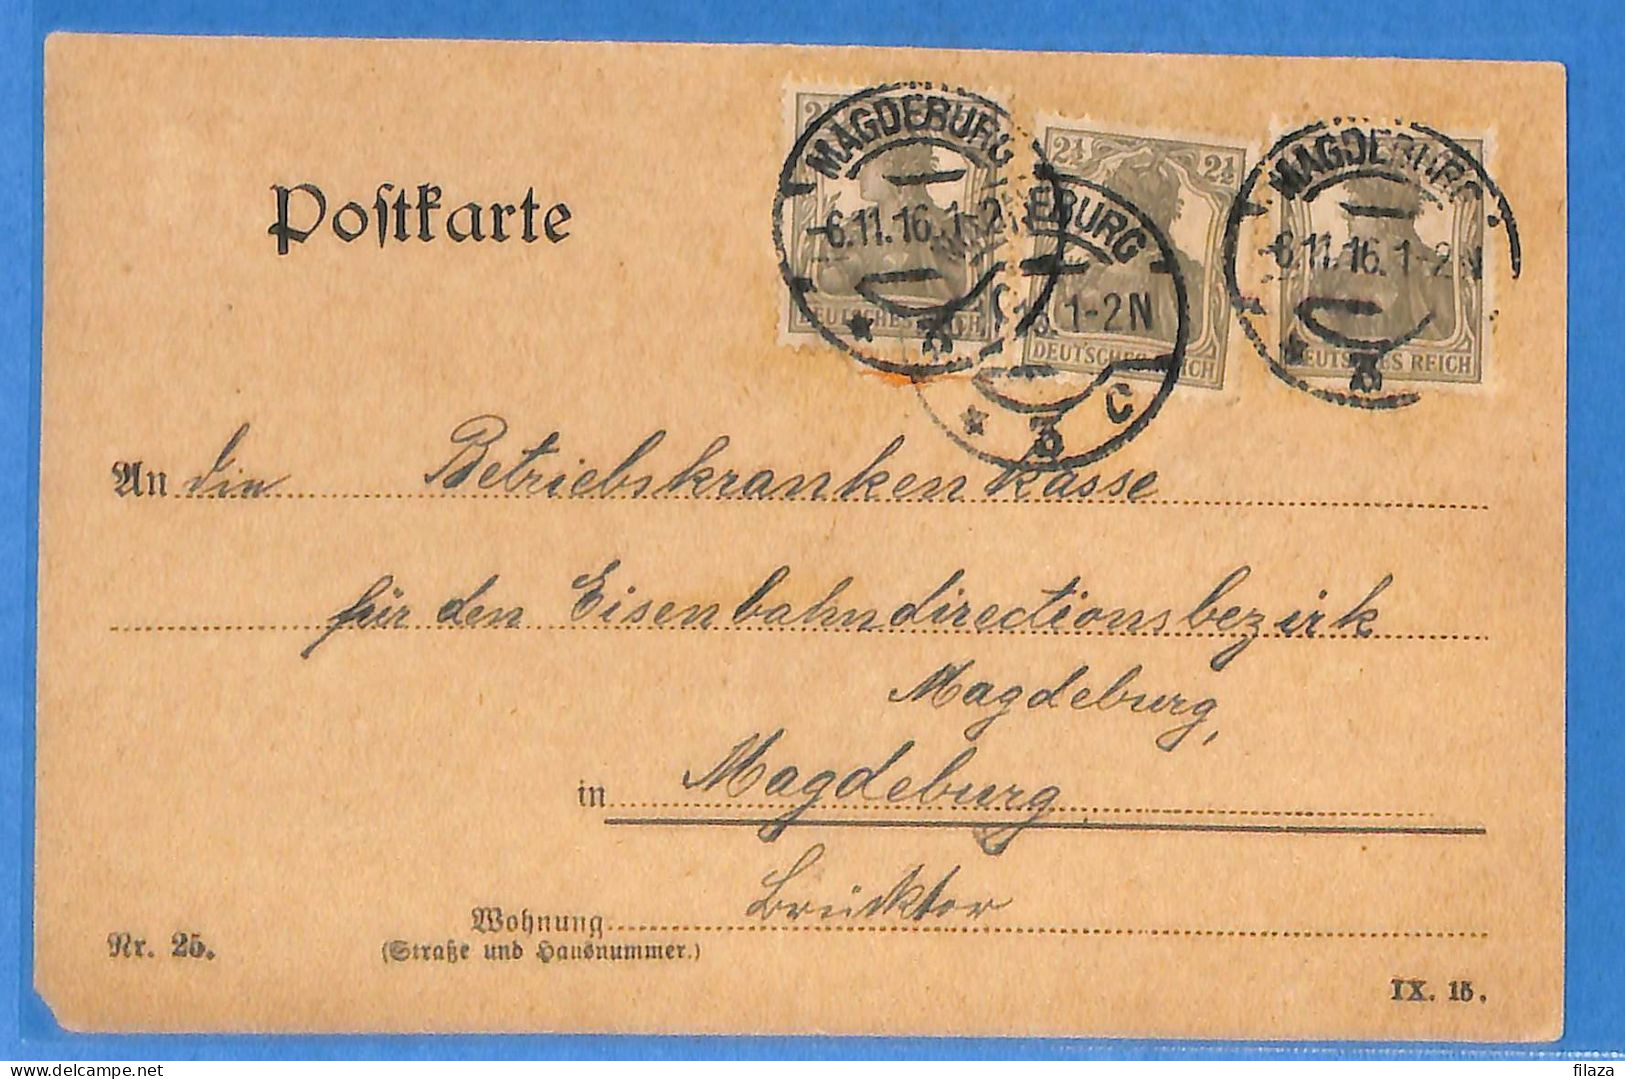 Allemagne Reich 1916 - Carte Postale De Magdeburg - G29607 - Covers & Documents